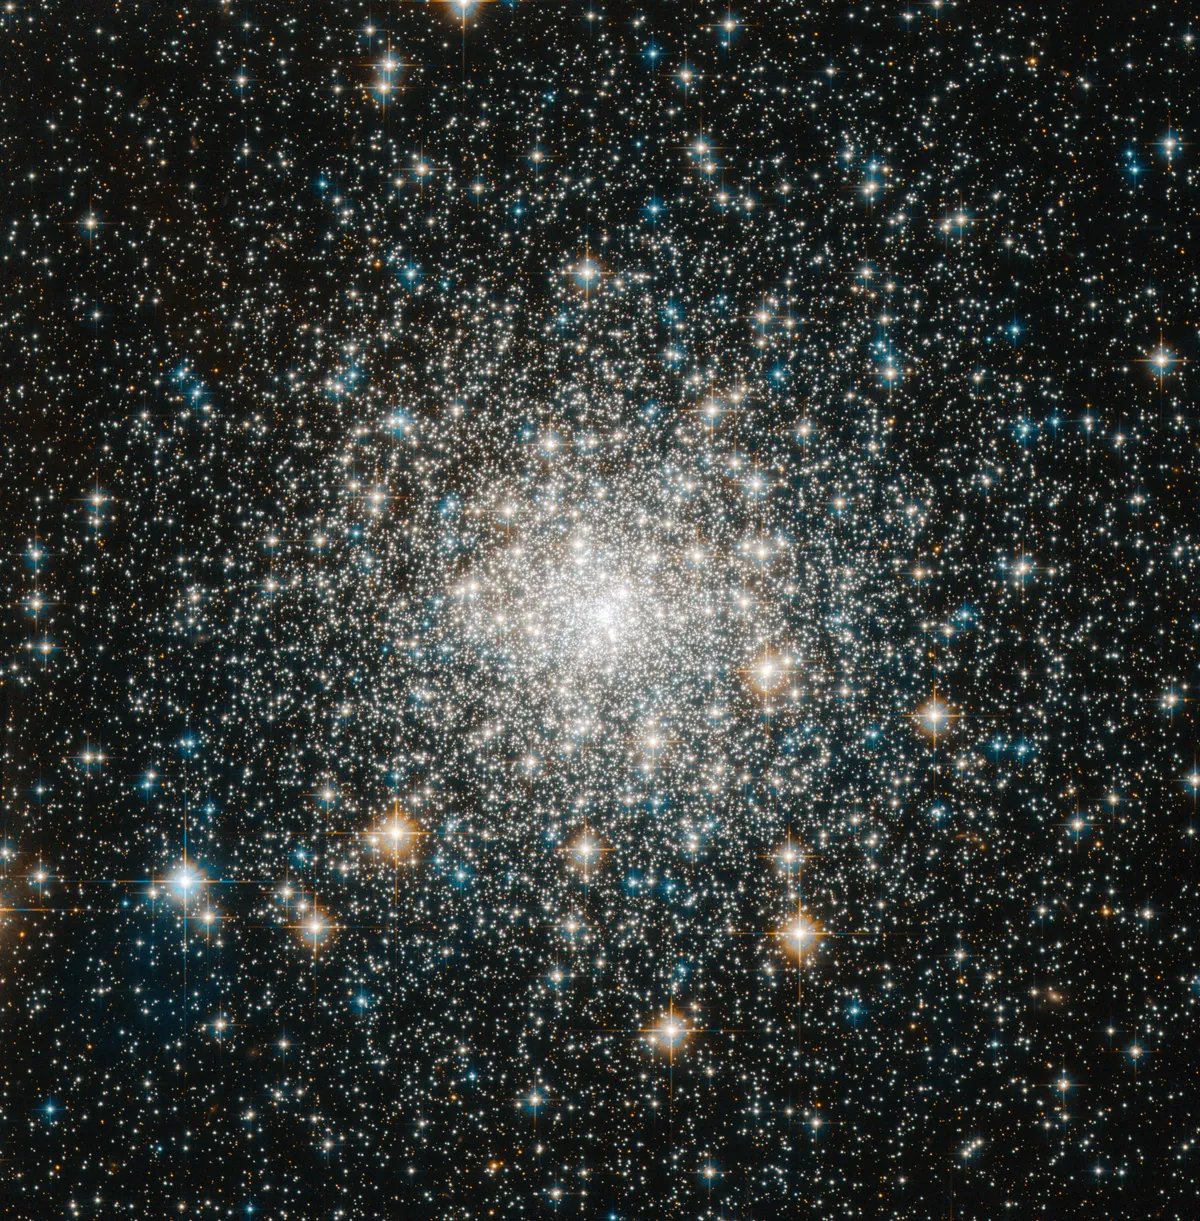 Credit: ESA/Hubble & NASA